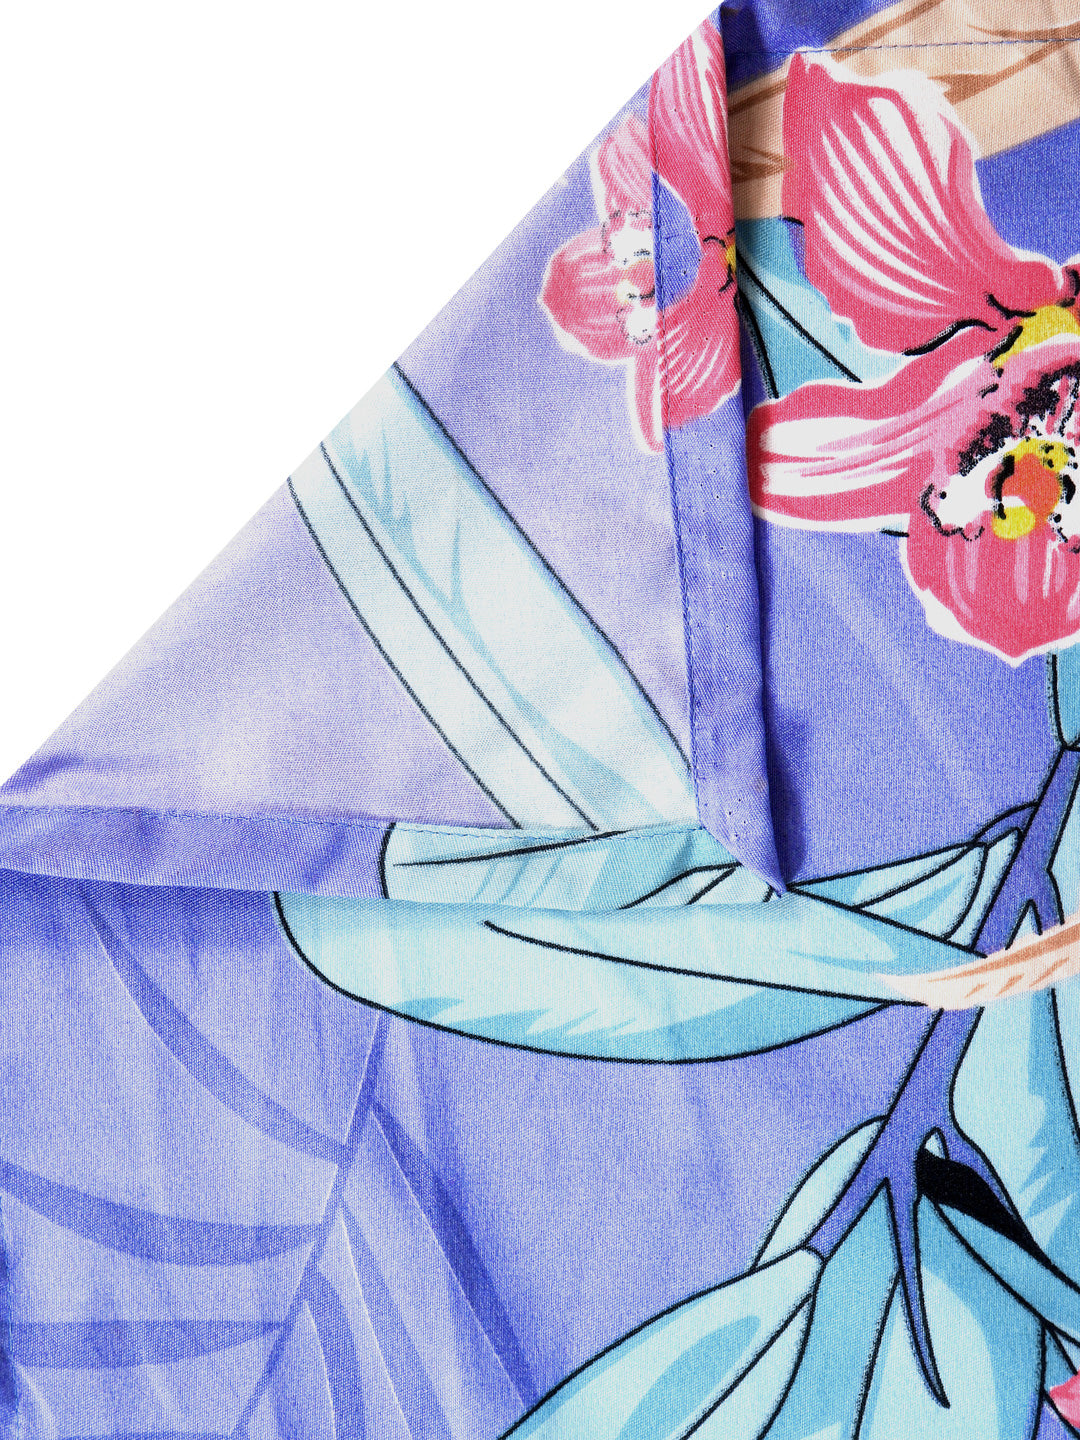 KLOTTHE Blue Polycotton Floral Single Bedsheet with 1 Pillow Cover (215X150 cm)